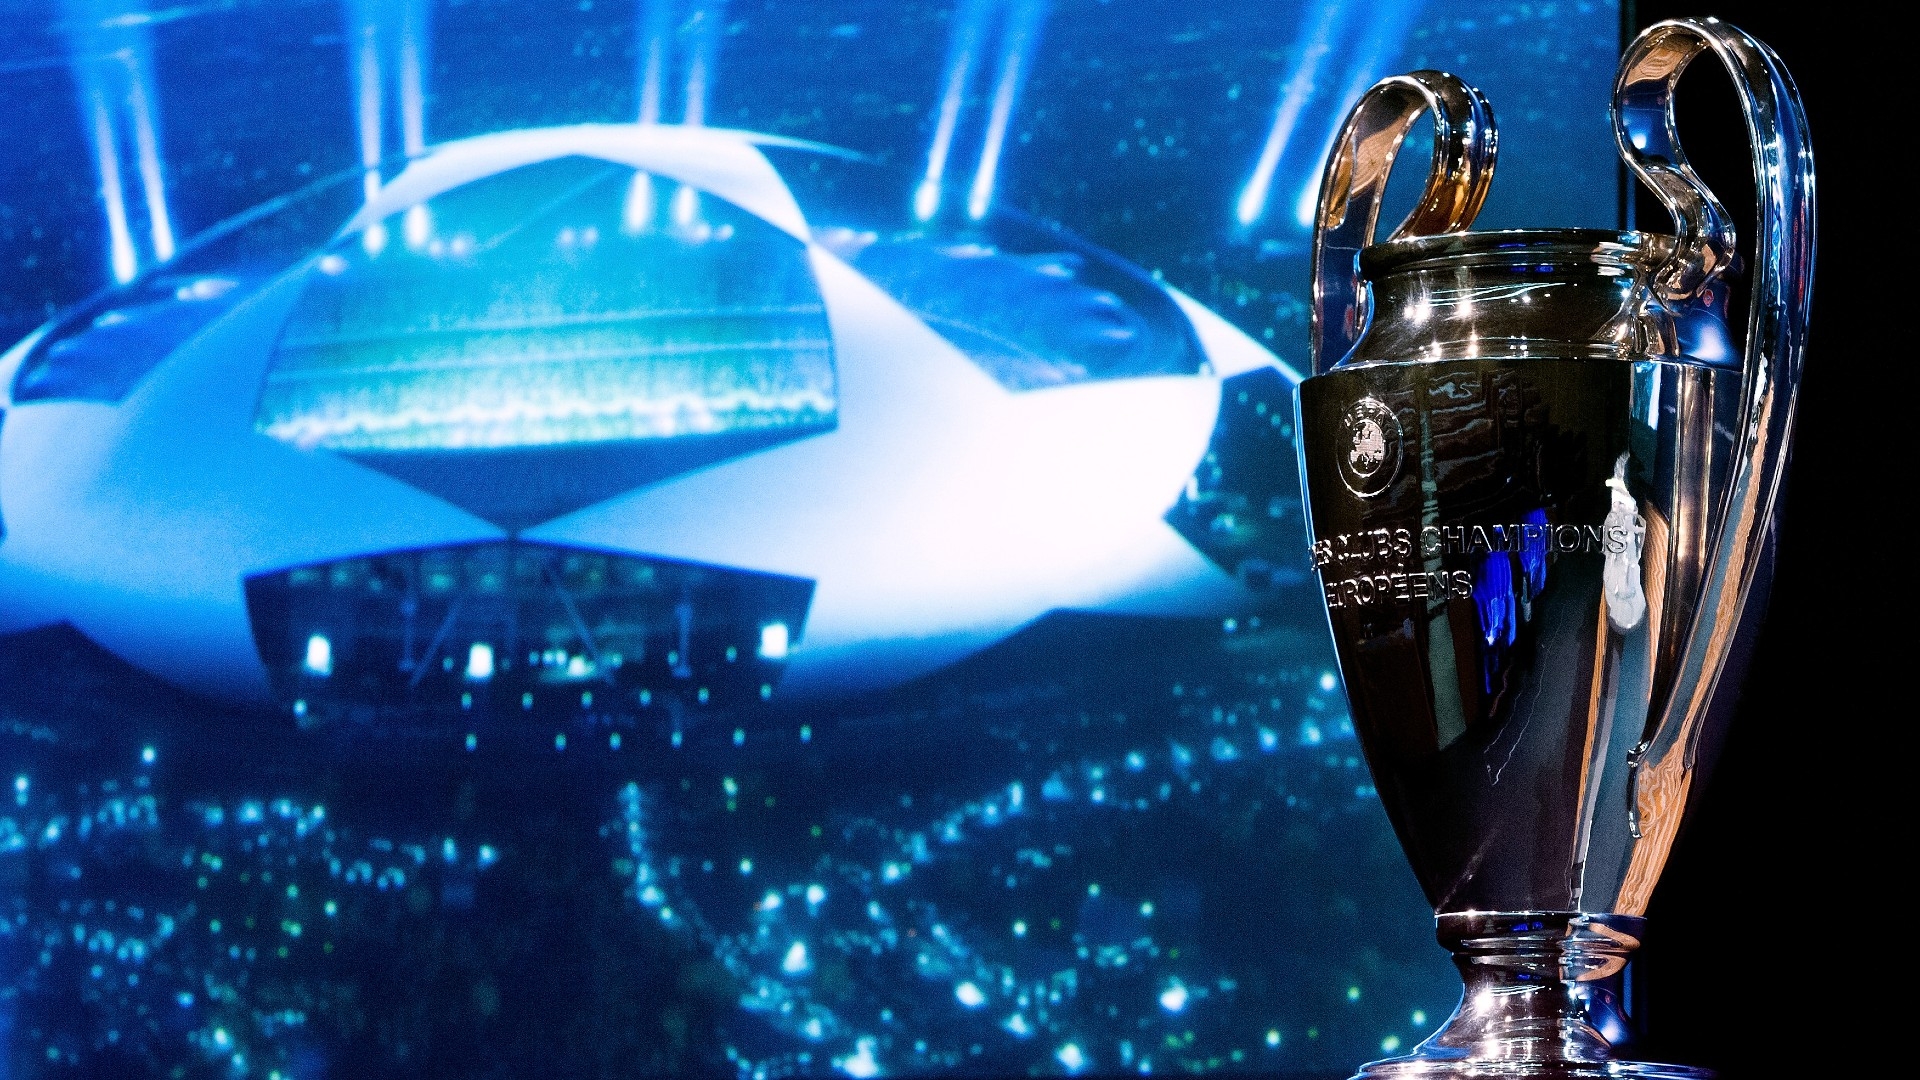 UEFA Champions League 2022/23: confrontos da fase de grupos